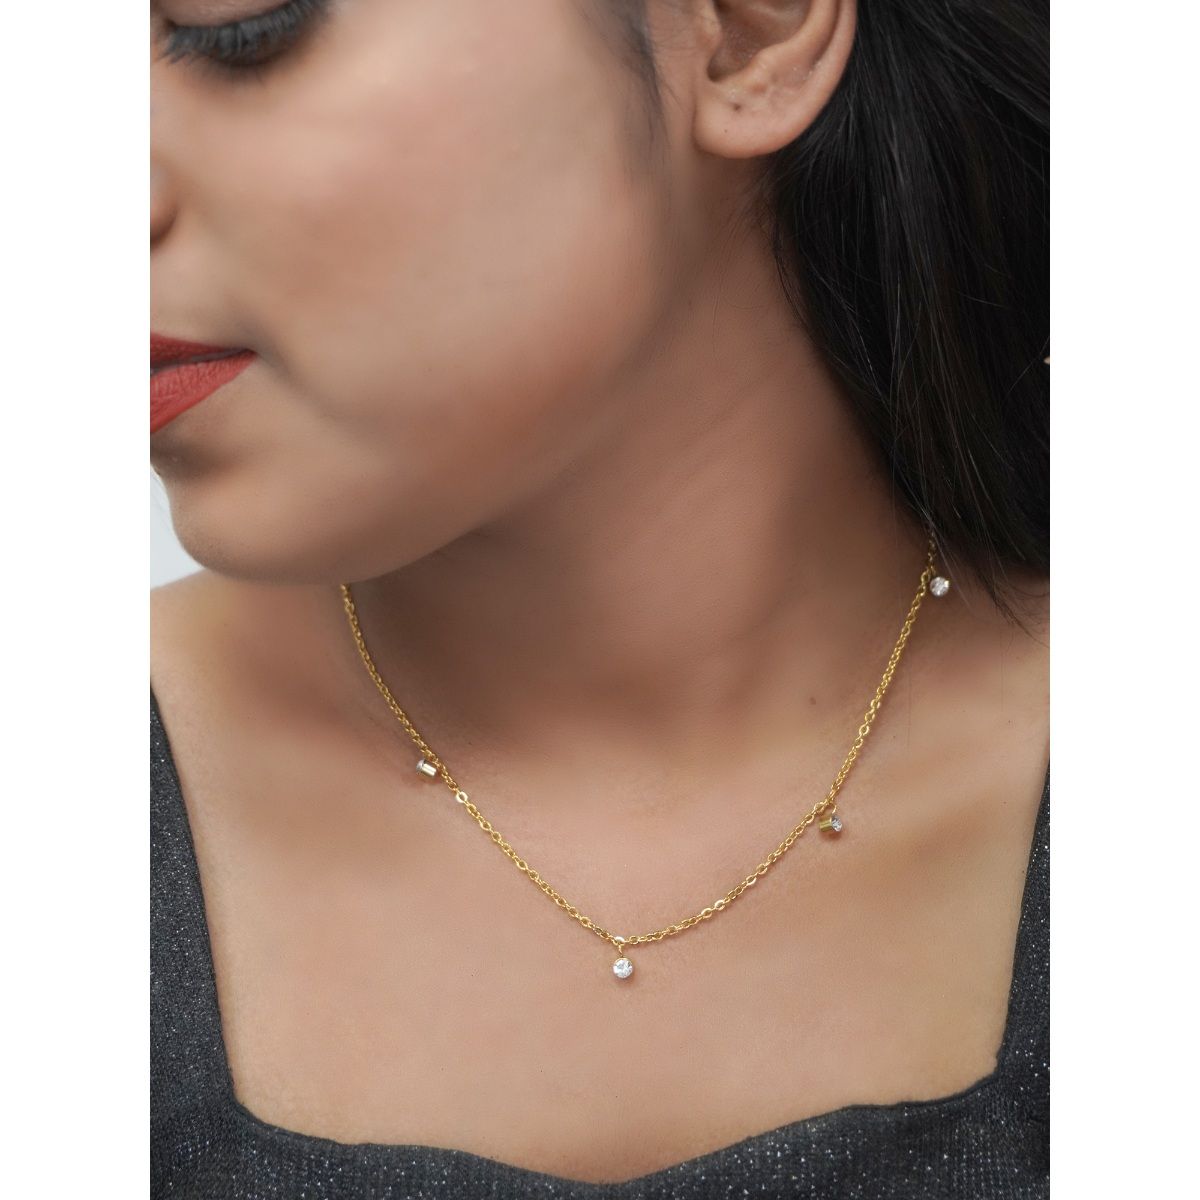 14k gold, juvenile: delicate gold chain with a small diamond pendant -  schmuckwerk-shop.de